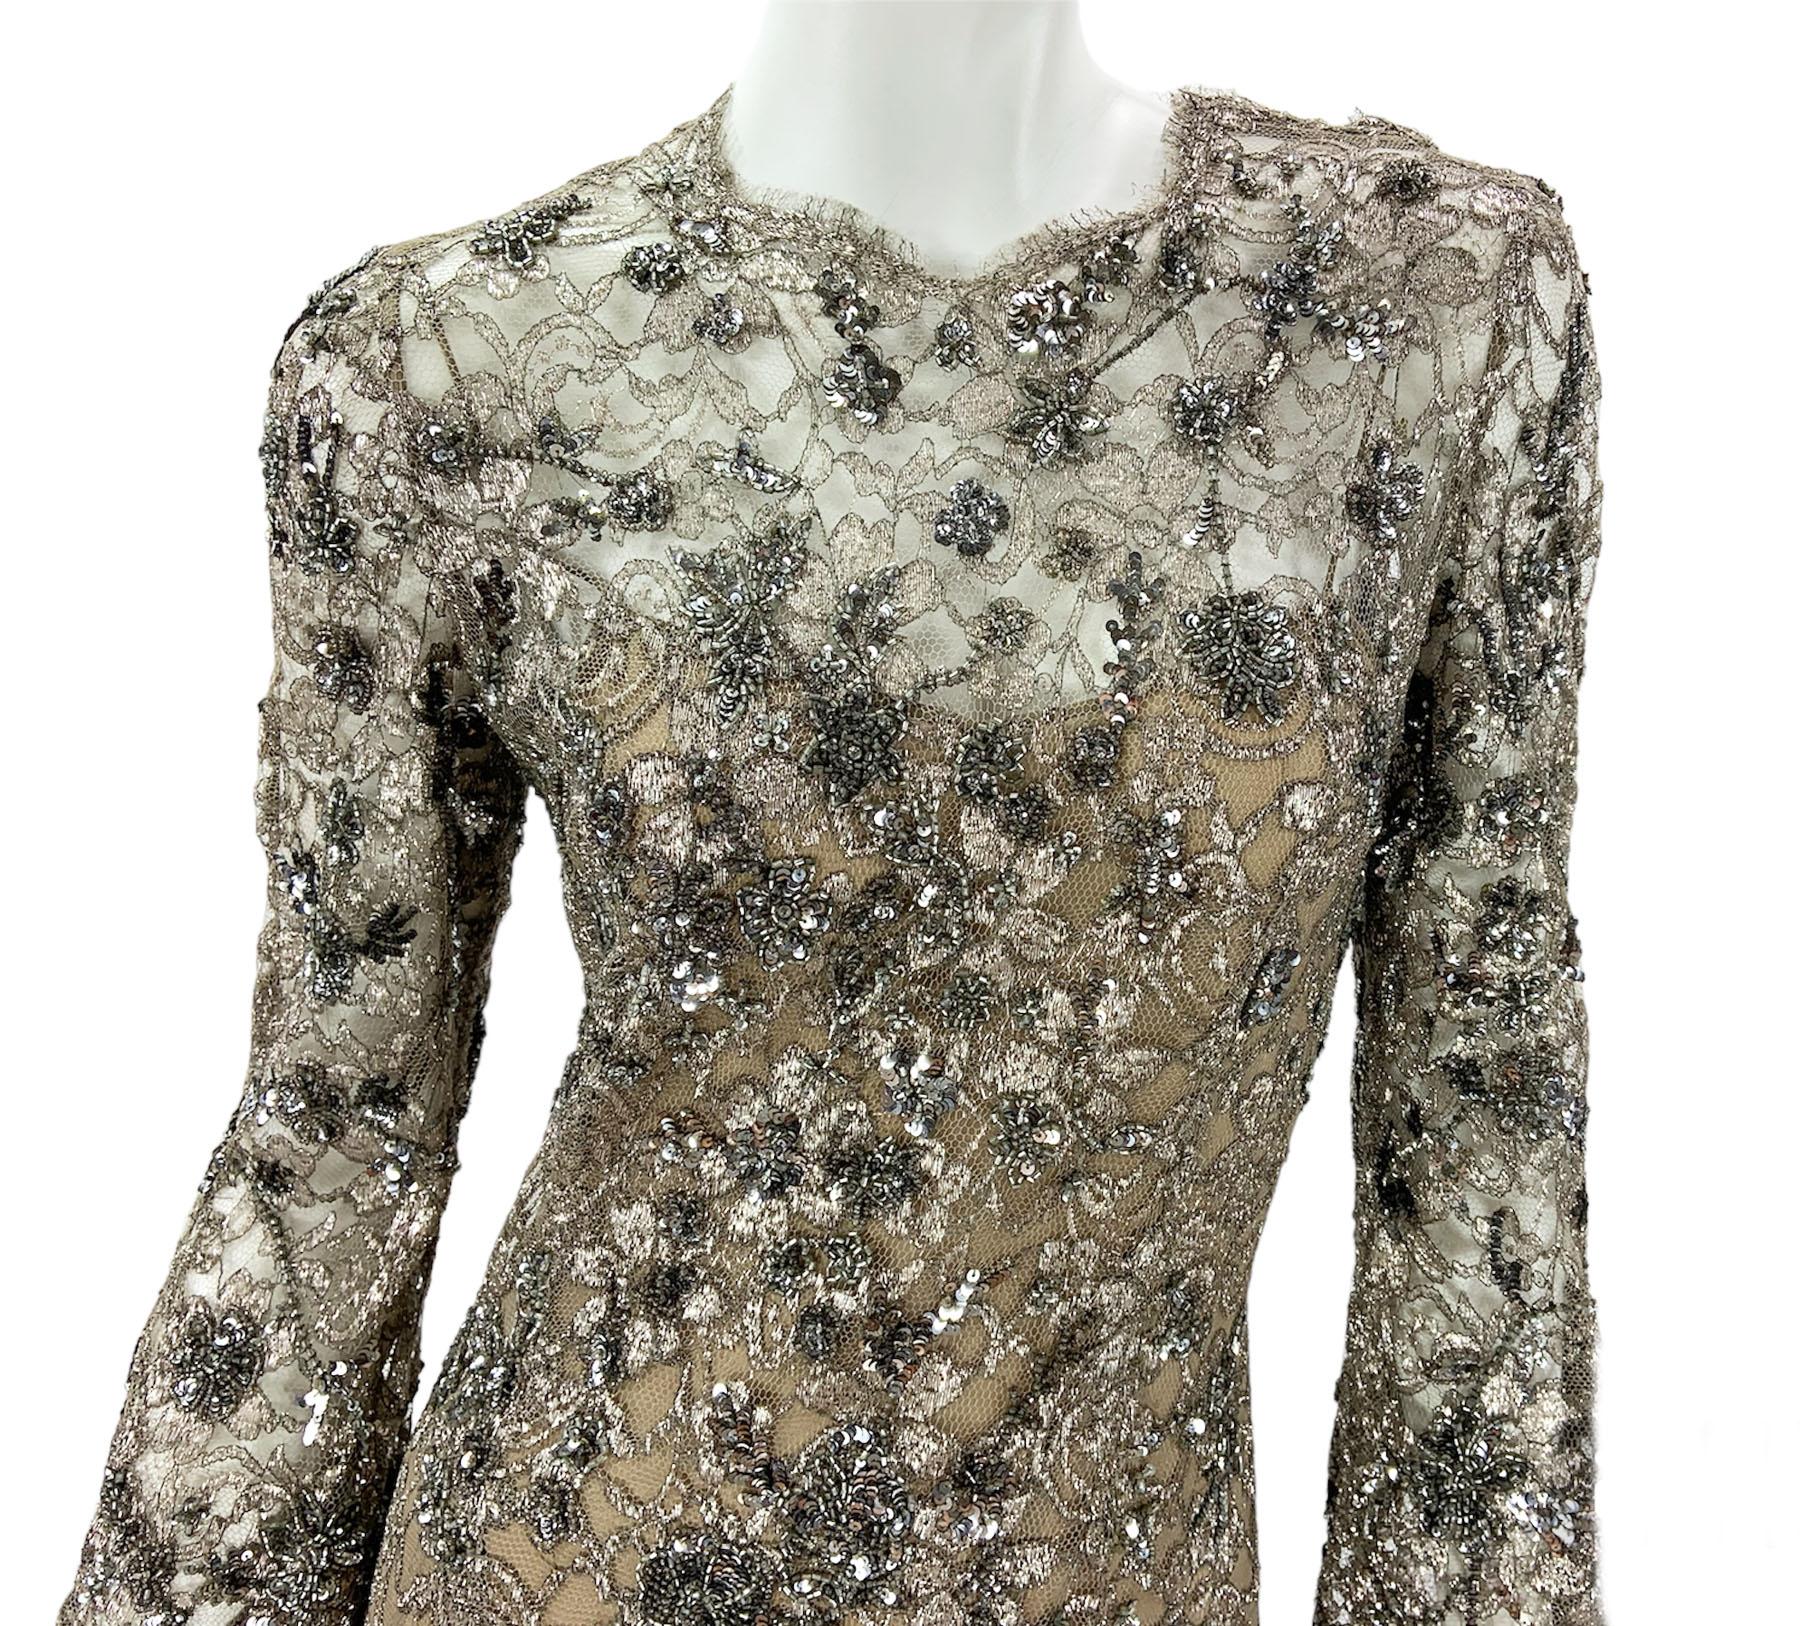 Vintage Oscar de la Renta Fully Embellished Smoky Gray Lace Dress Gown  4